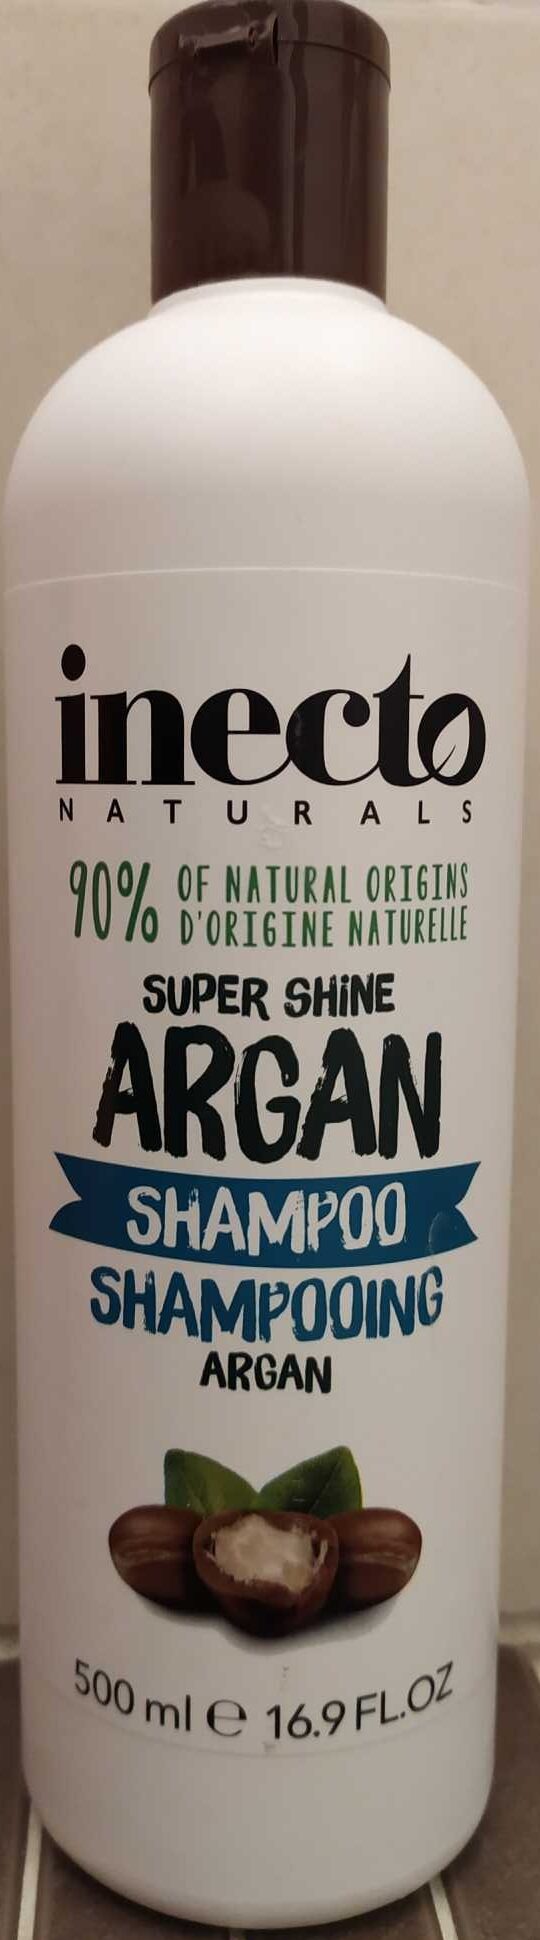 Shampoing ARGAN - Продукт - fr